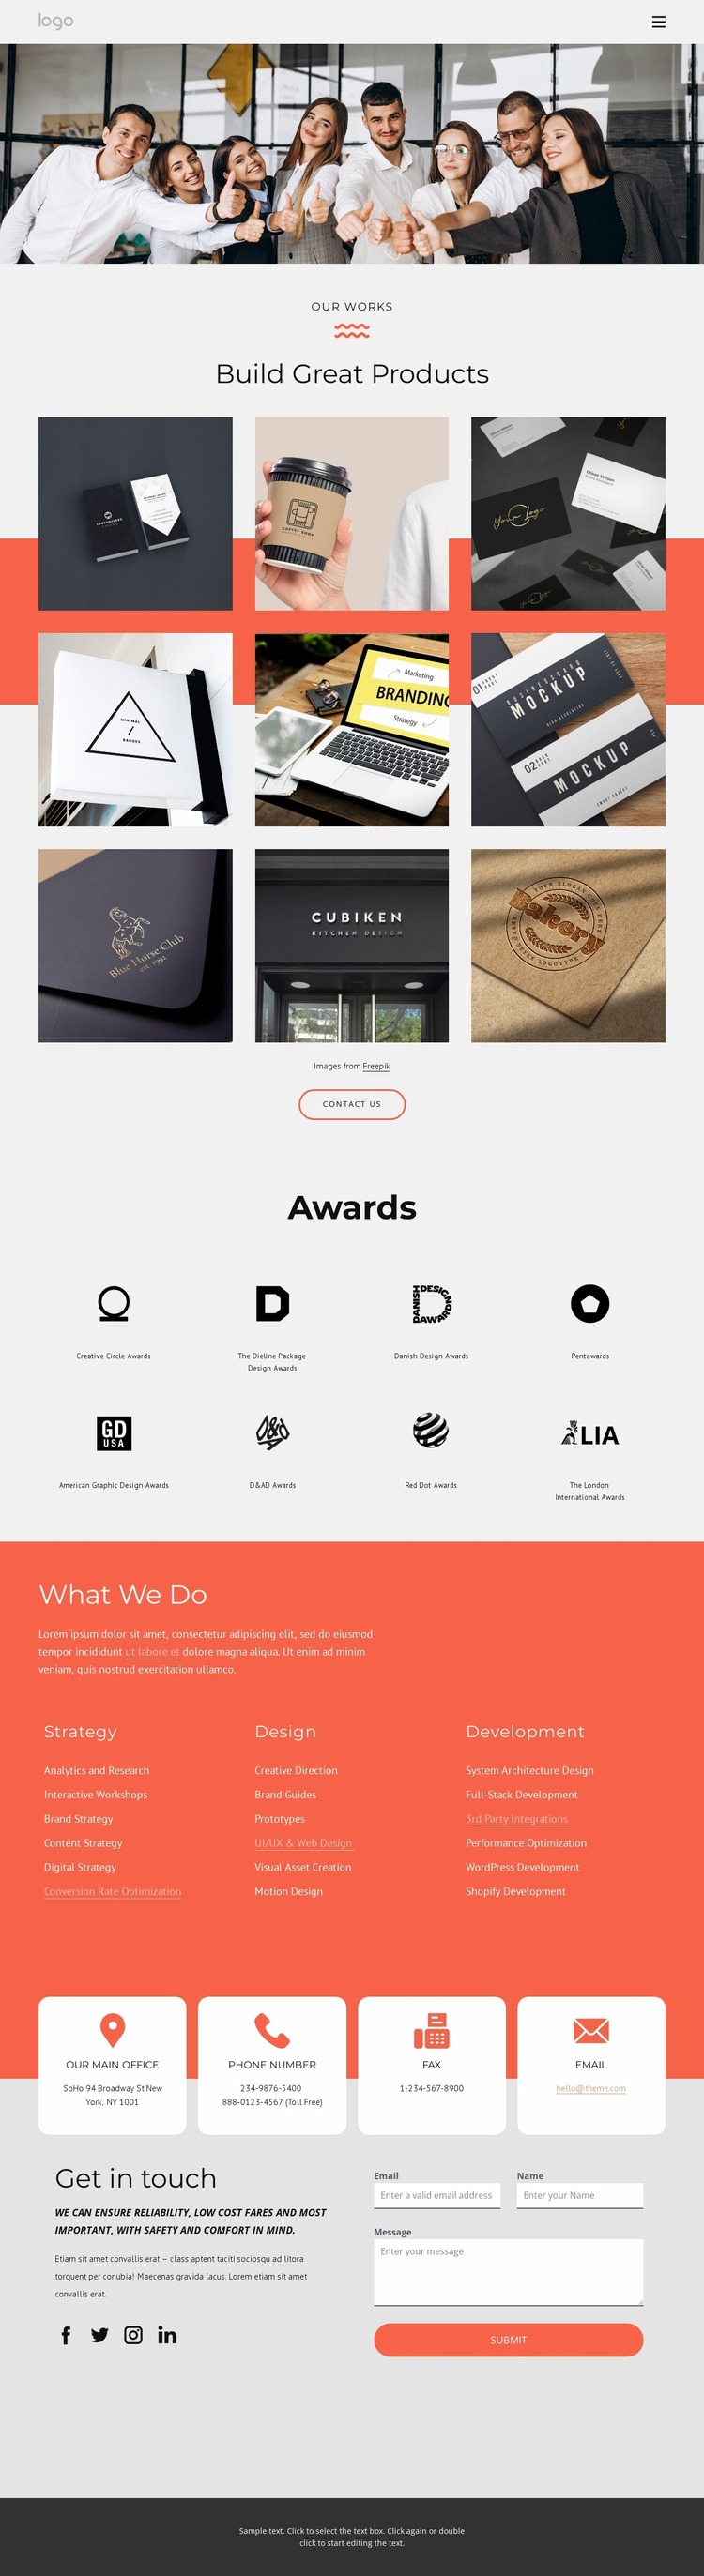 Award winning branding services Website Mockup